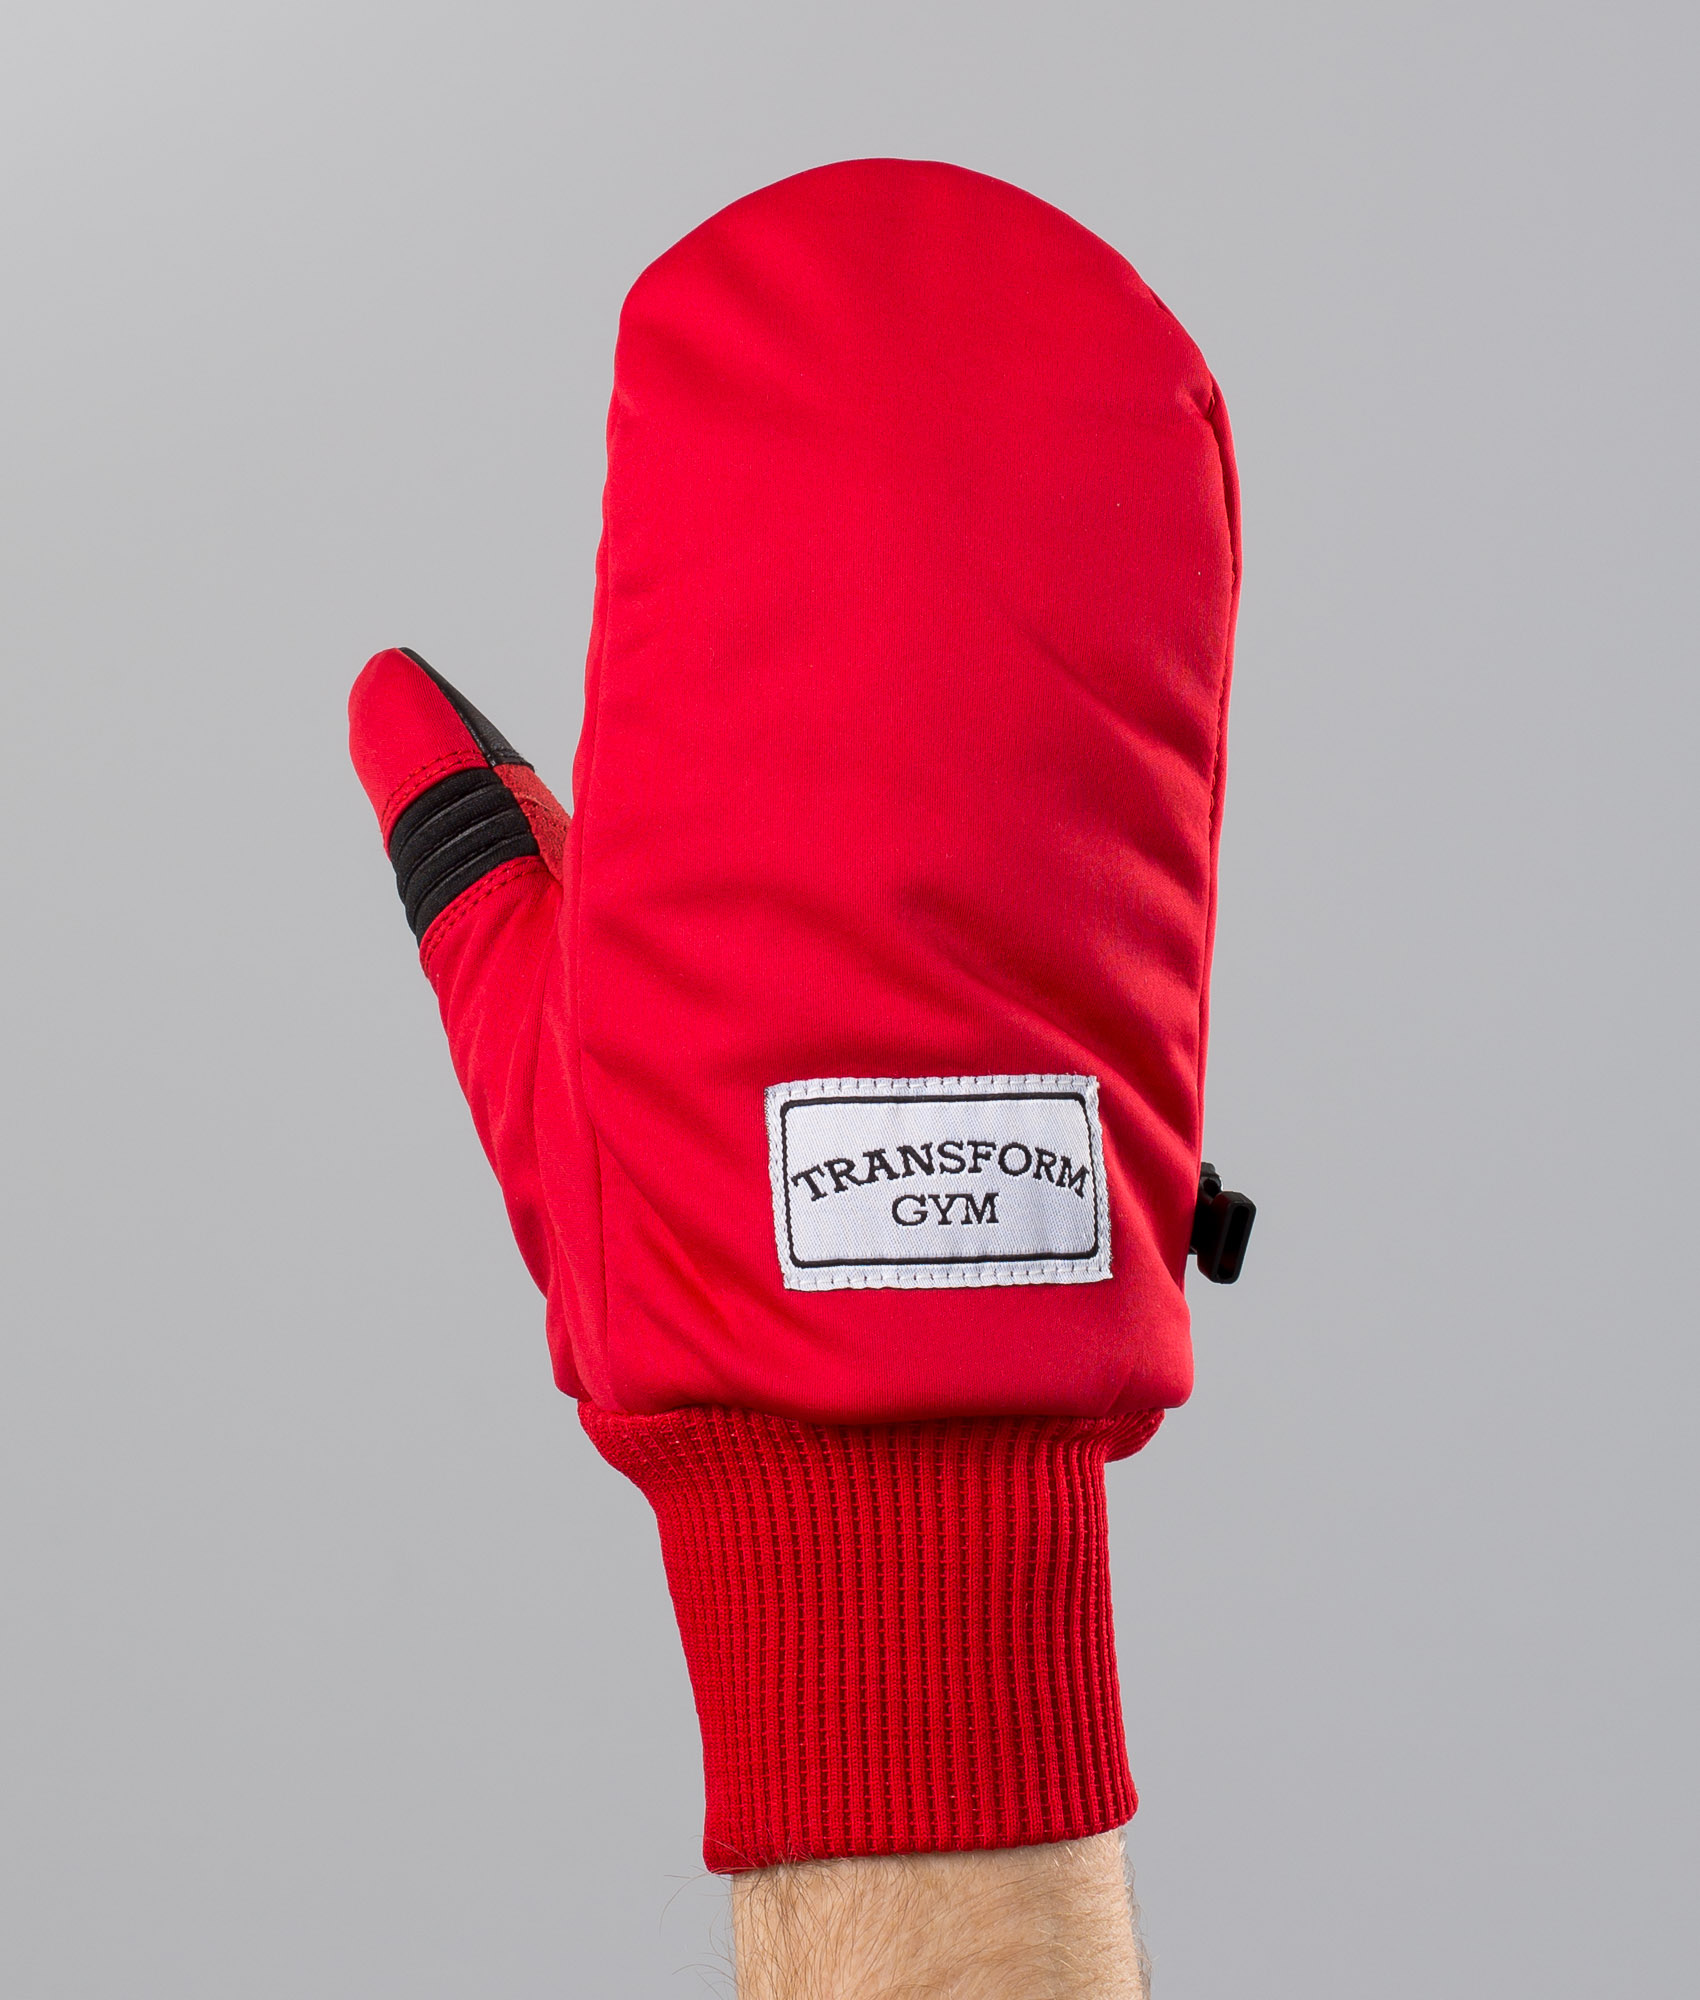 red ski gloves